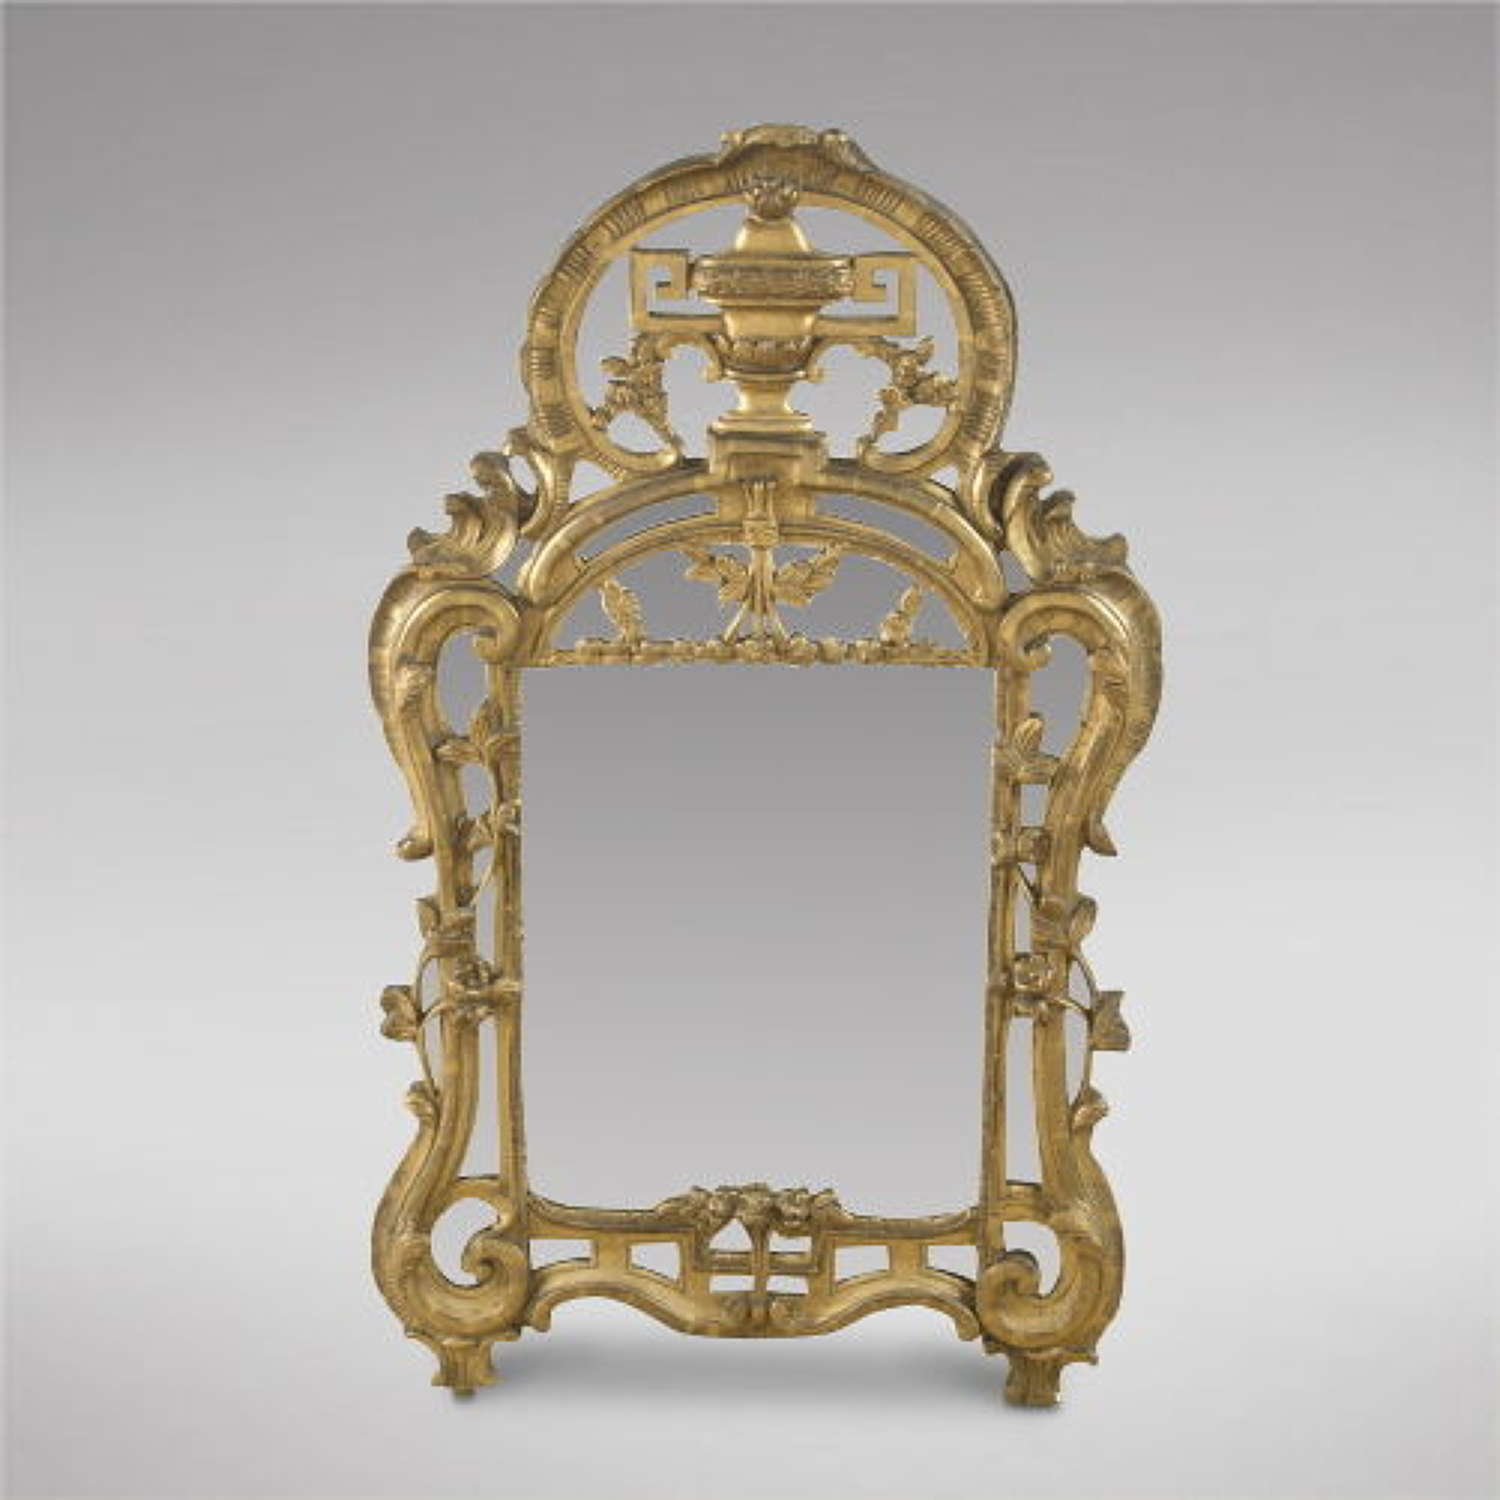 19th Century Giltwood Mirror